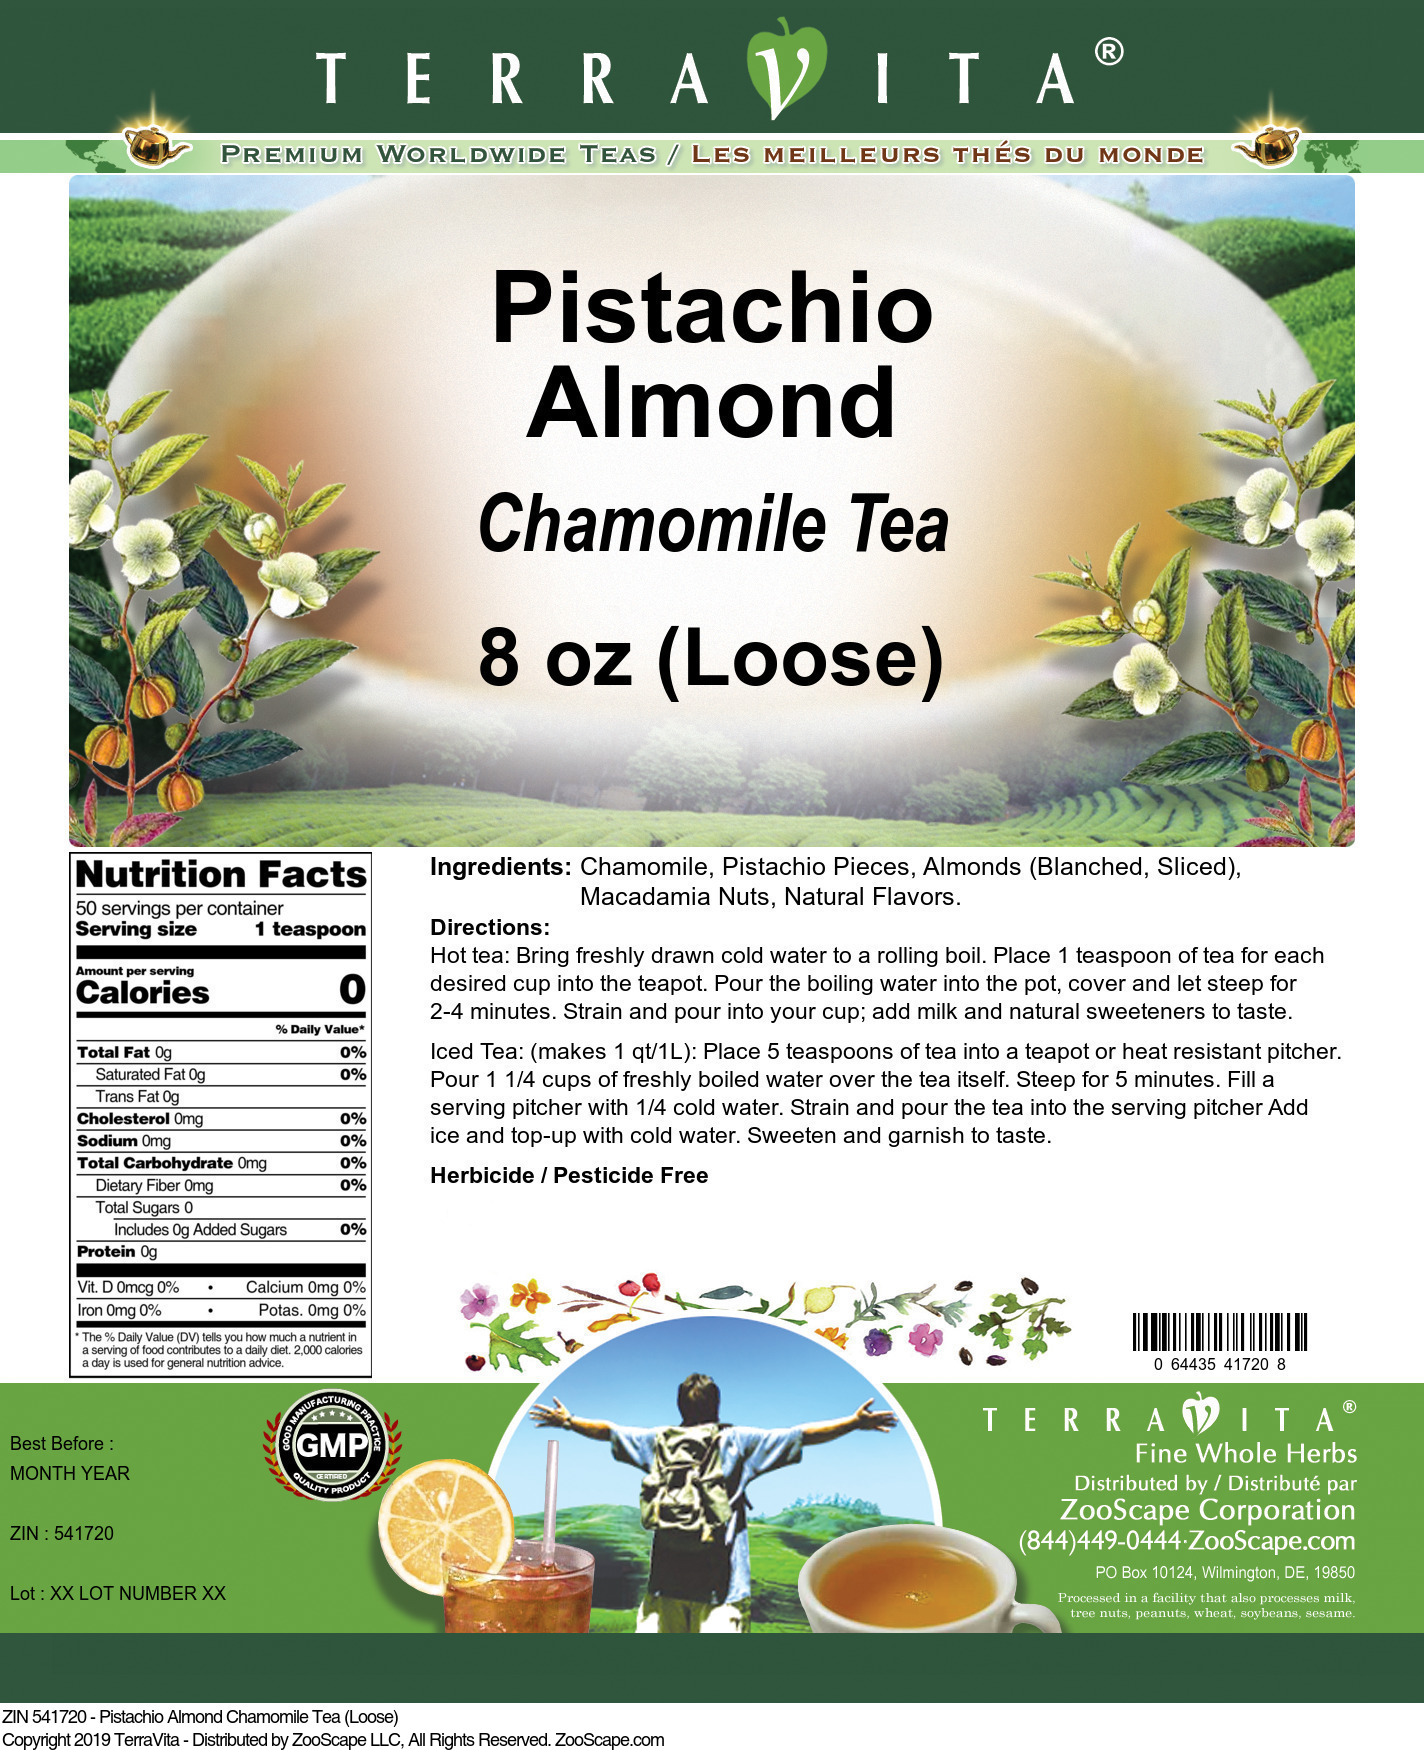 Pistachio Almond Chamomile Tea (Loose) - Label